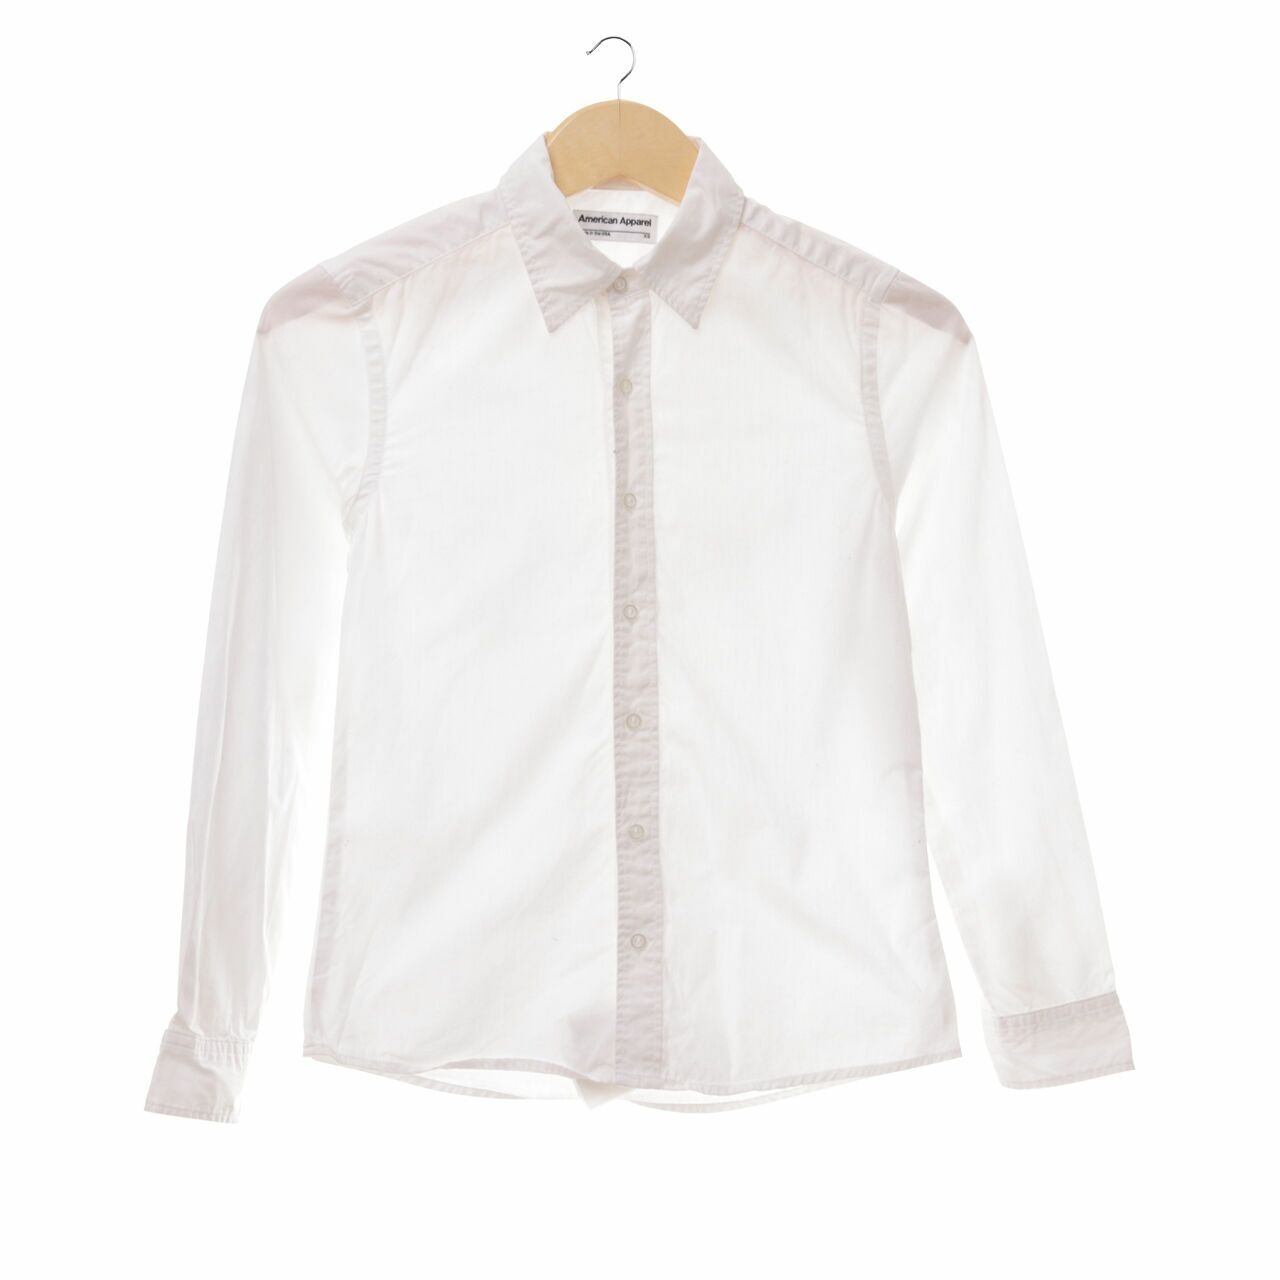 American Apparel White Shirt